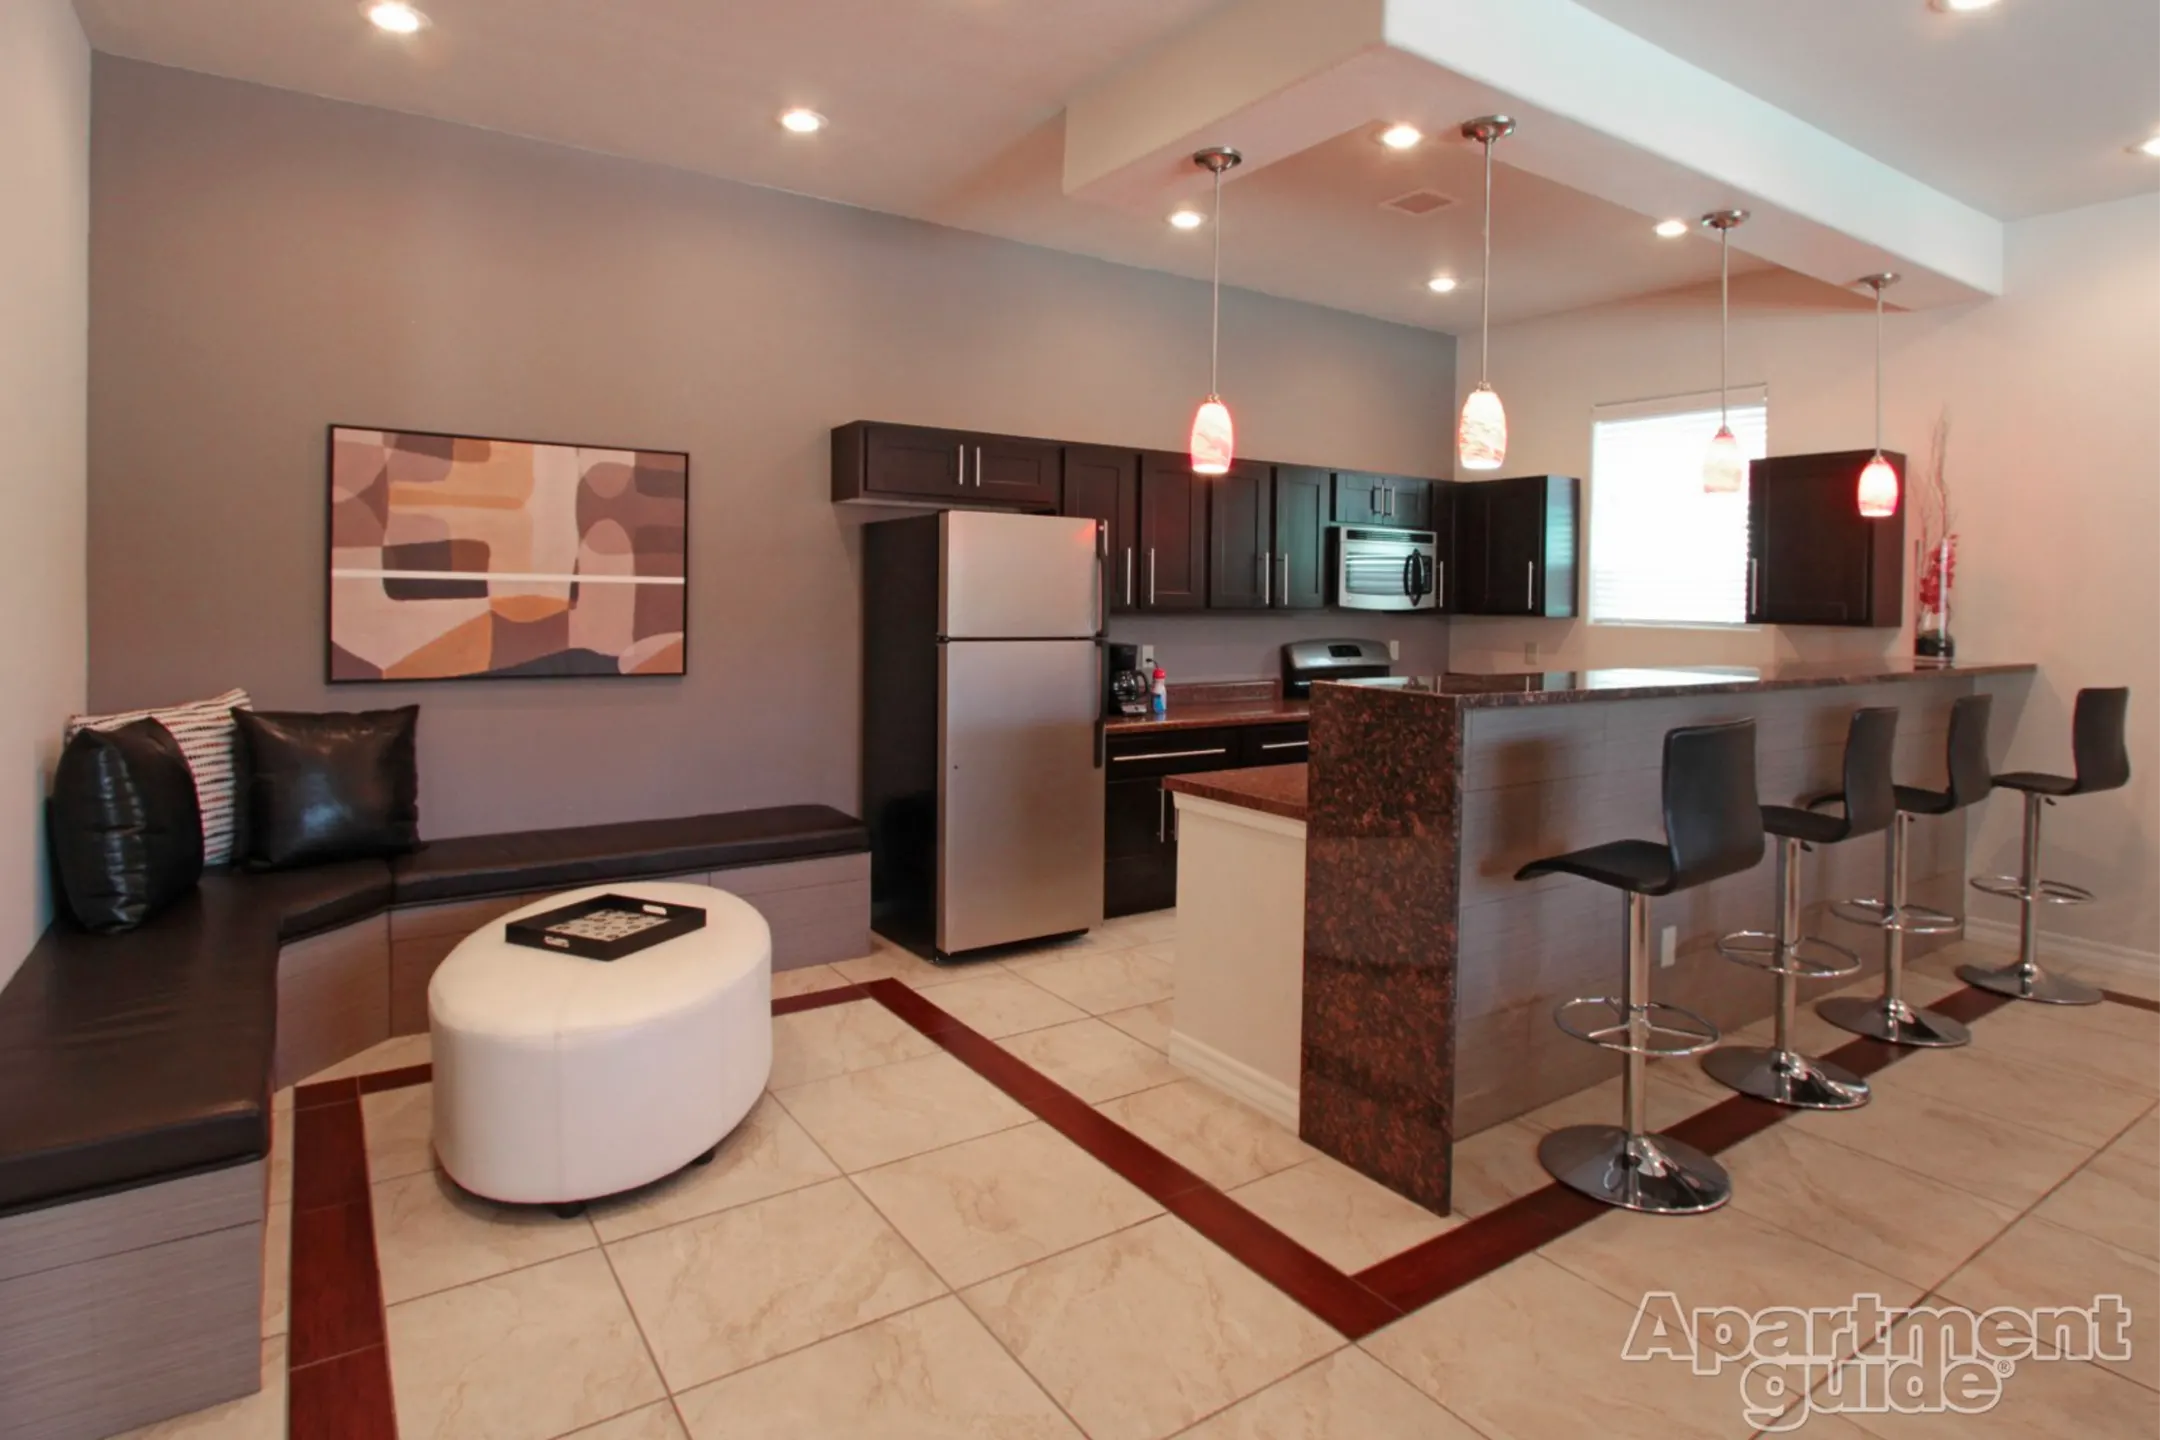 Kitchen - Villas at Helen Troy Apartments - El Paso, TX